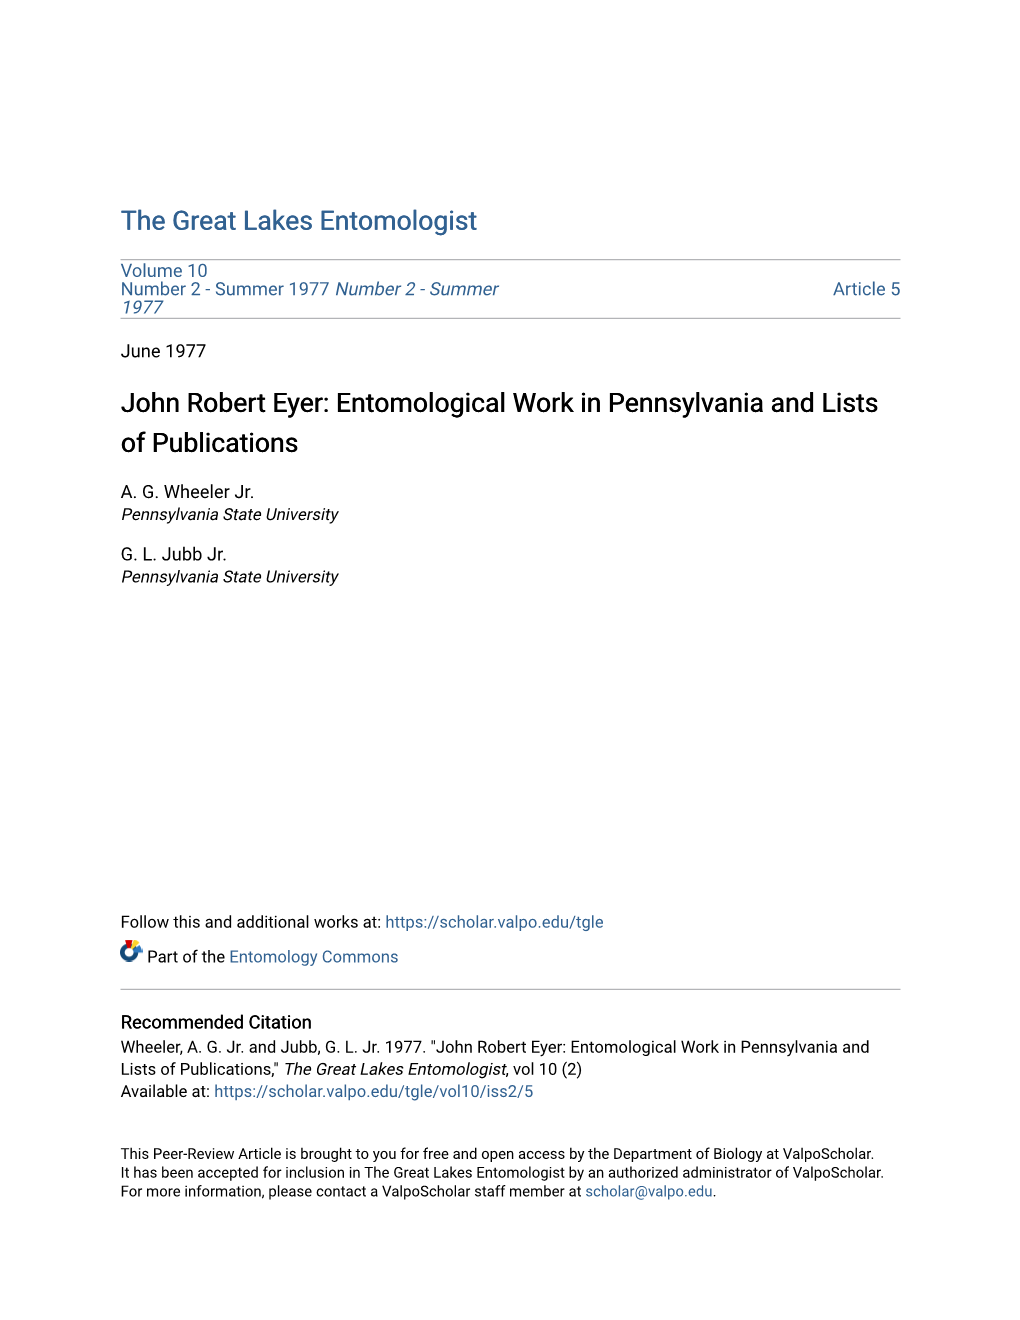 John Robert Eyer: Entomological Work in Pennsylvania and Lists of Publications